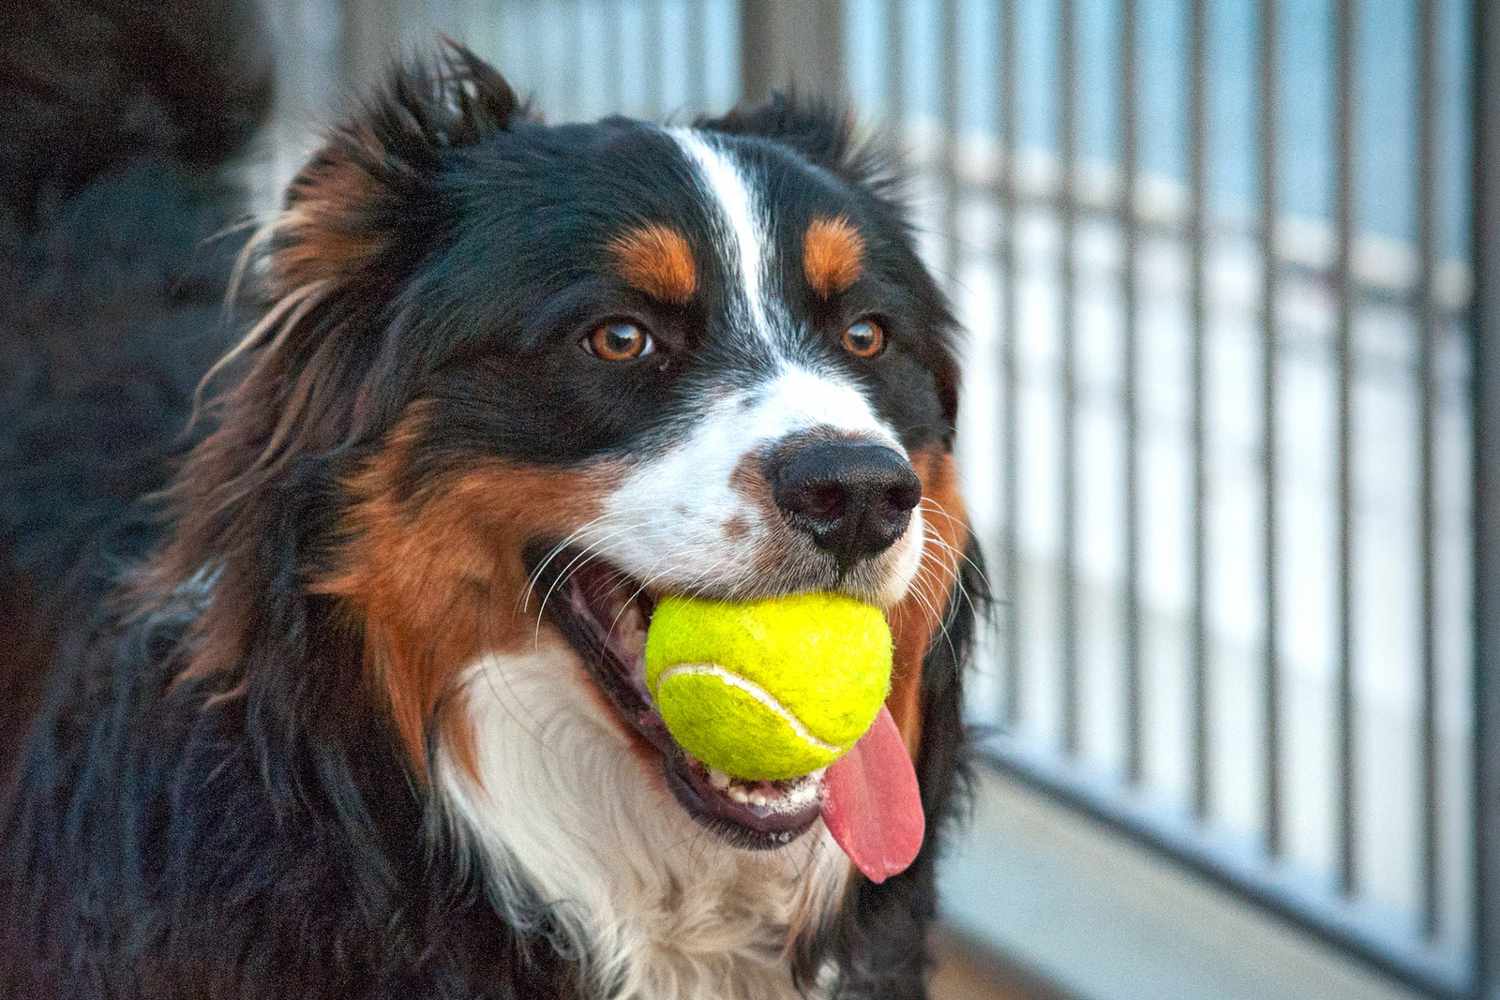 English shepherd plays with tennis ball